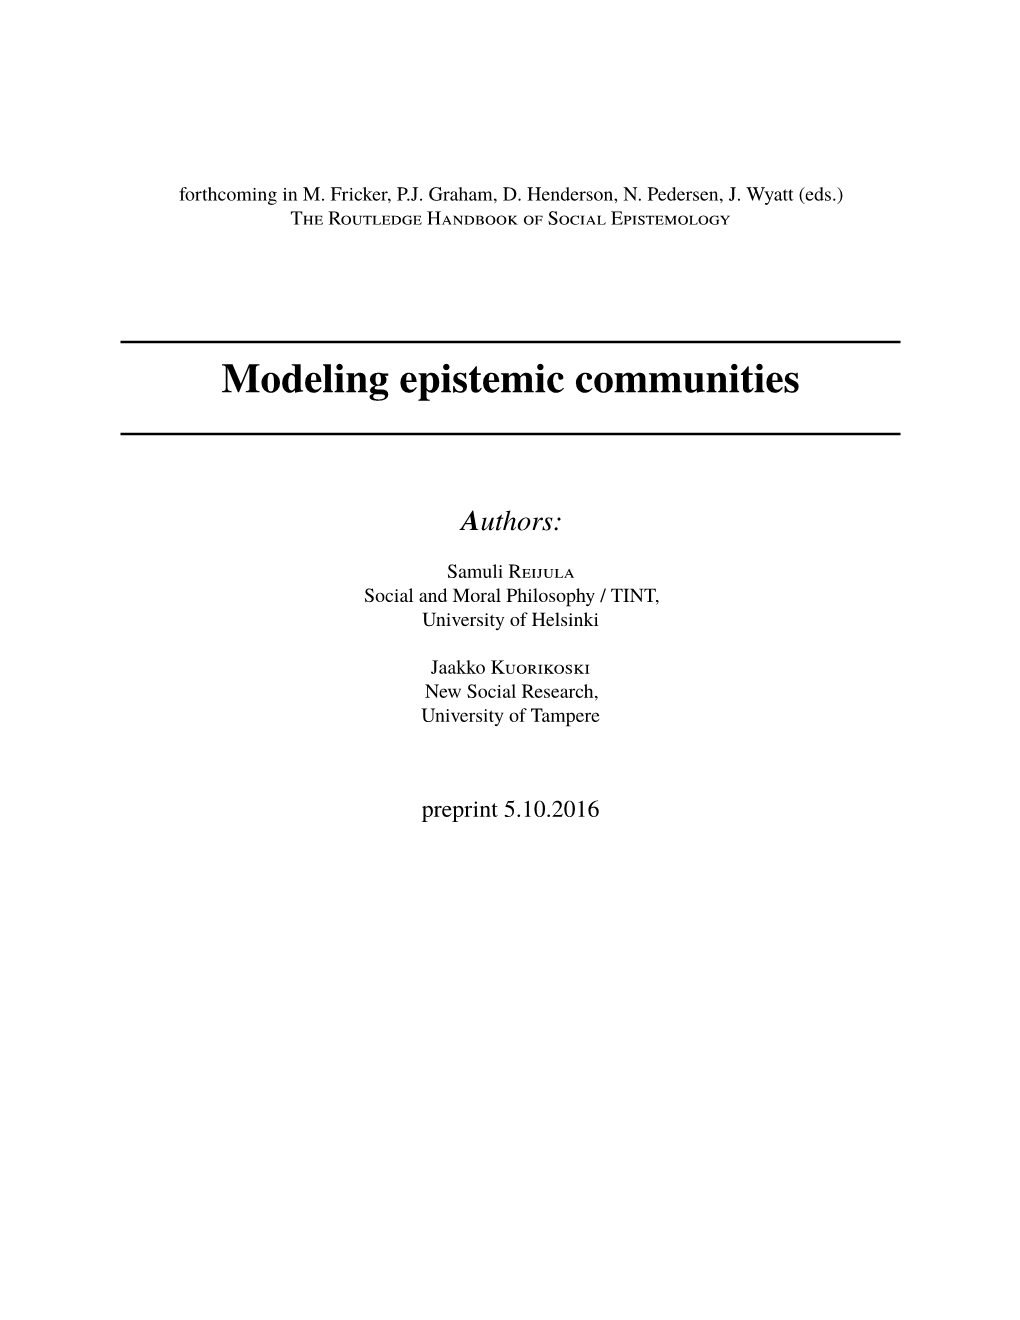 Modeling Epistemic Communities